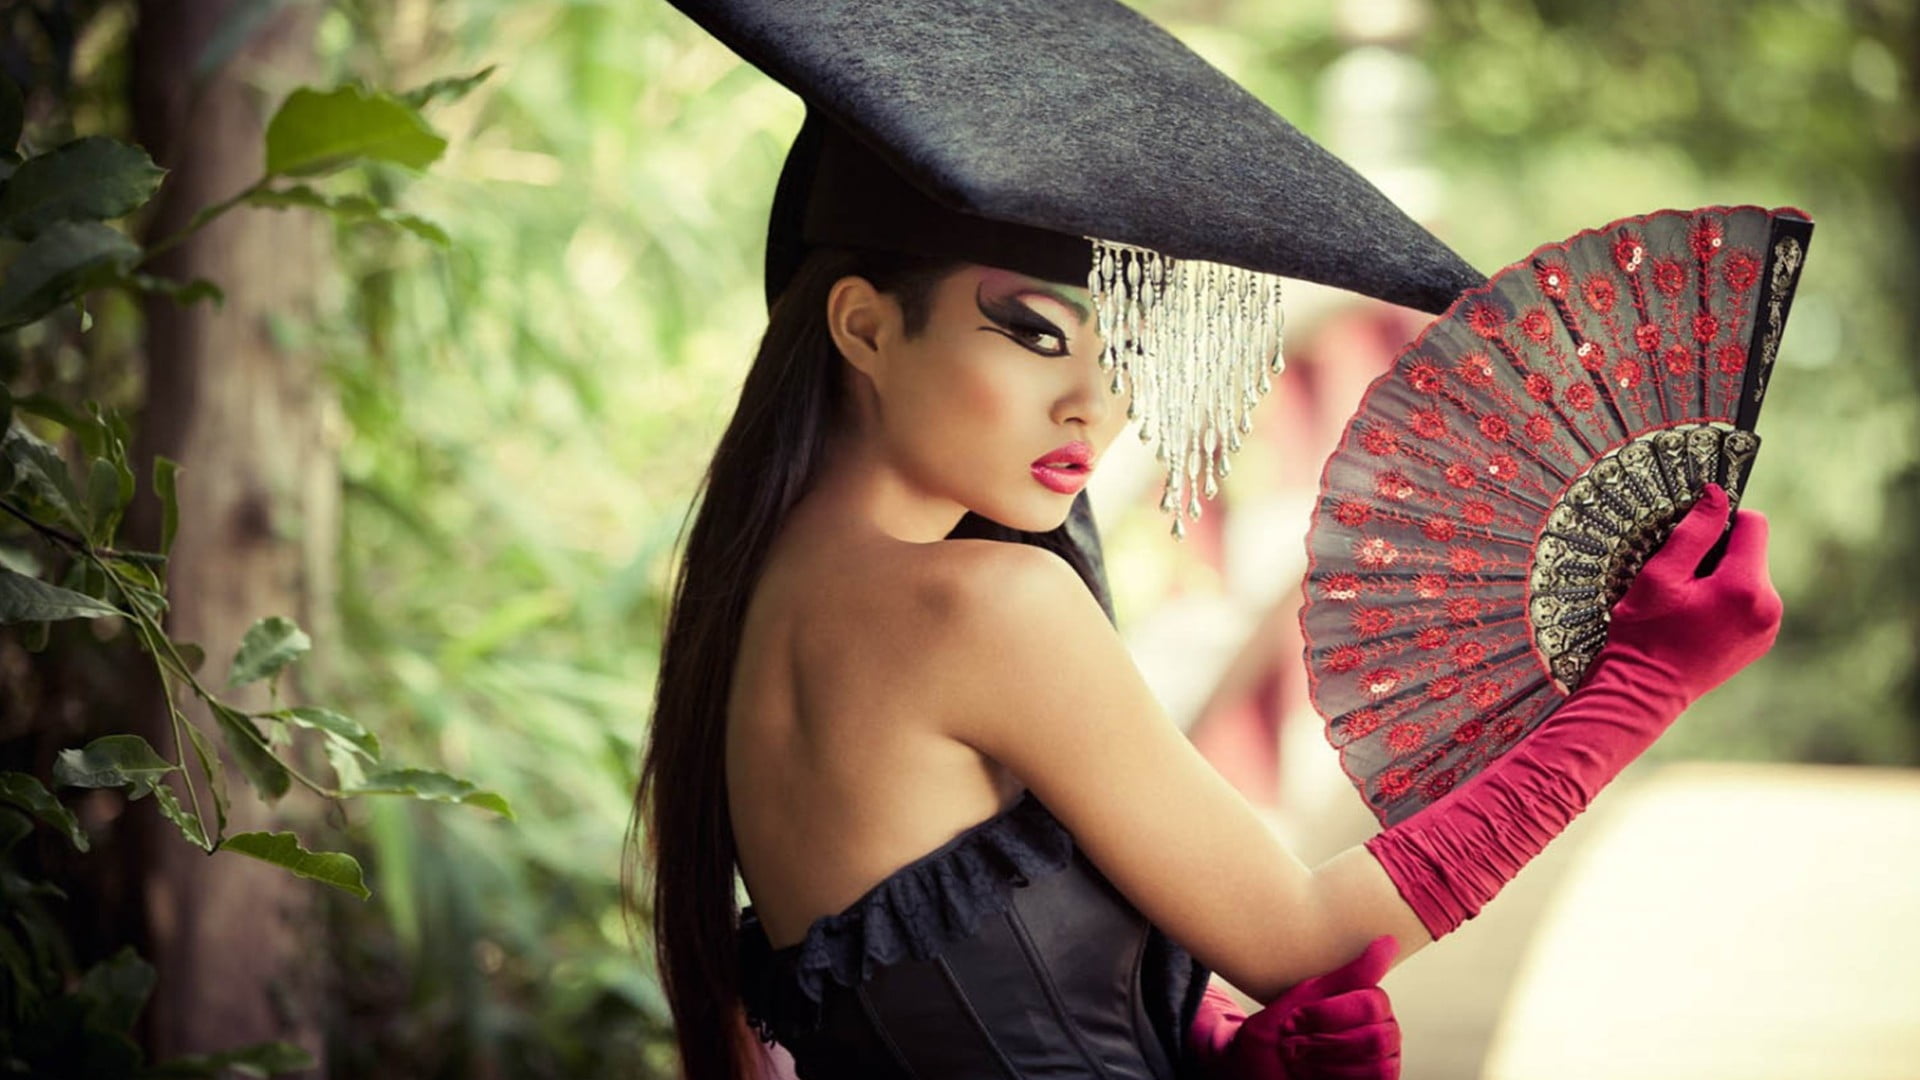 woman wearing black strapless dress holding red hand fan